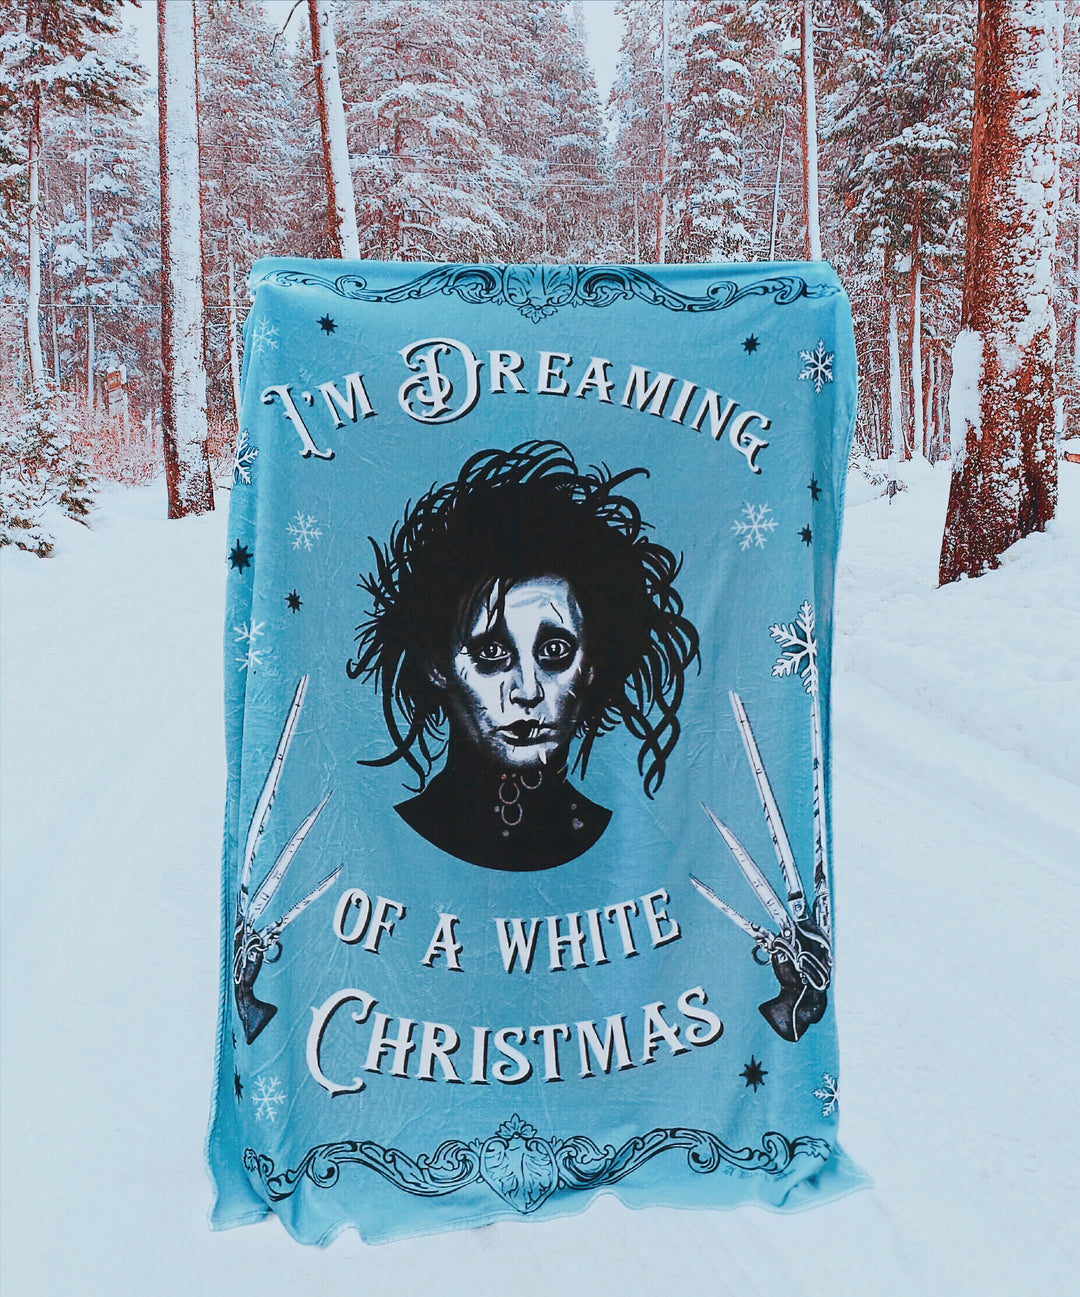 I'm Dreaming of a White Christmas Fleece Blanket, Edward Scissorhands Blanket, Christmas Blanket